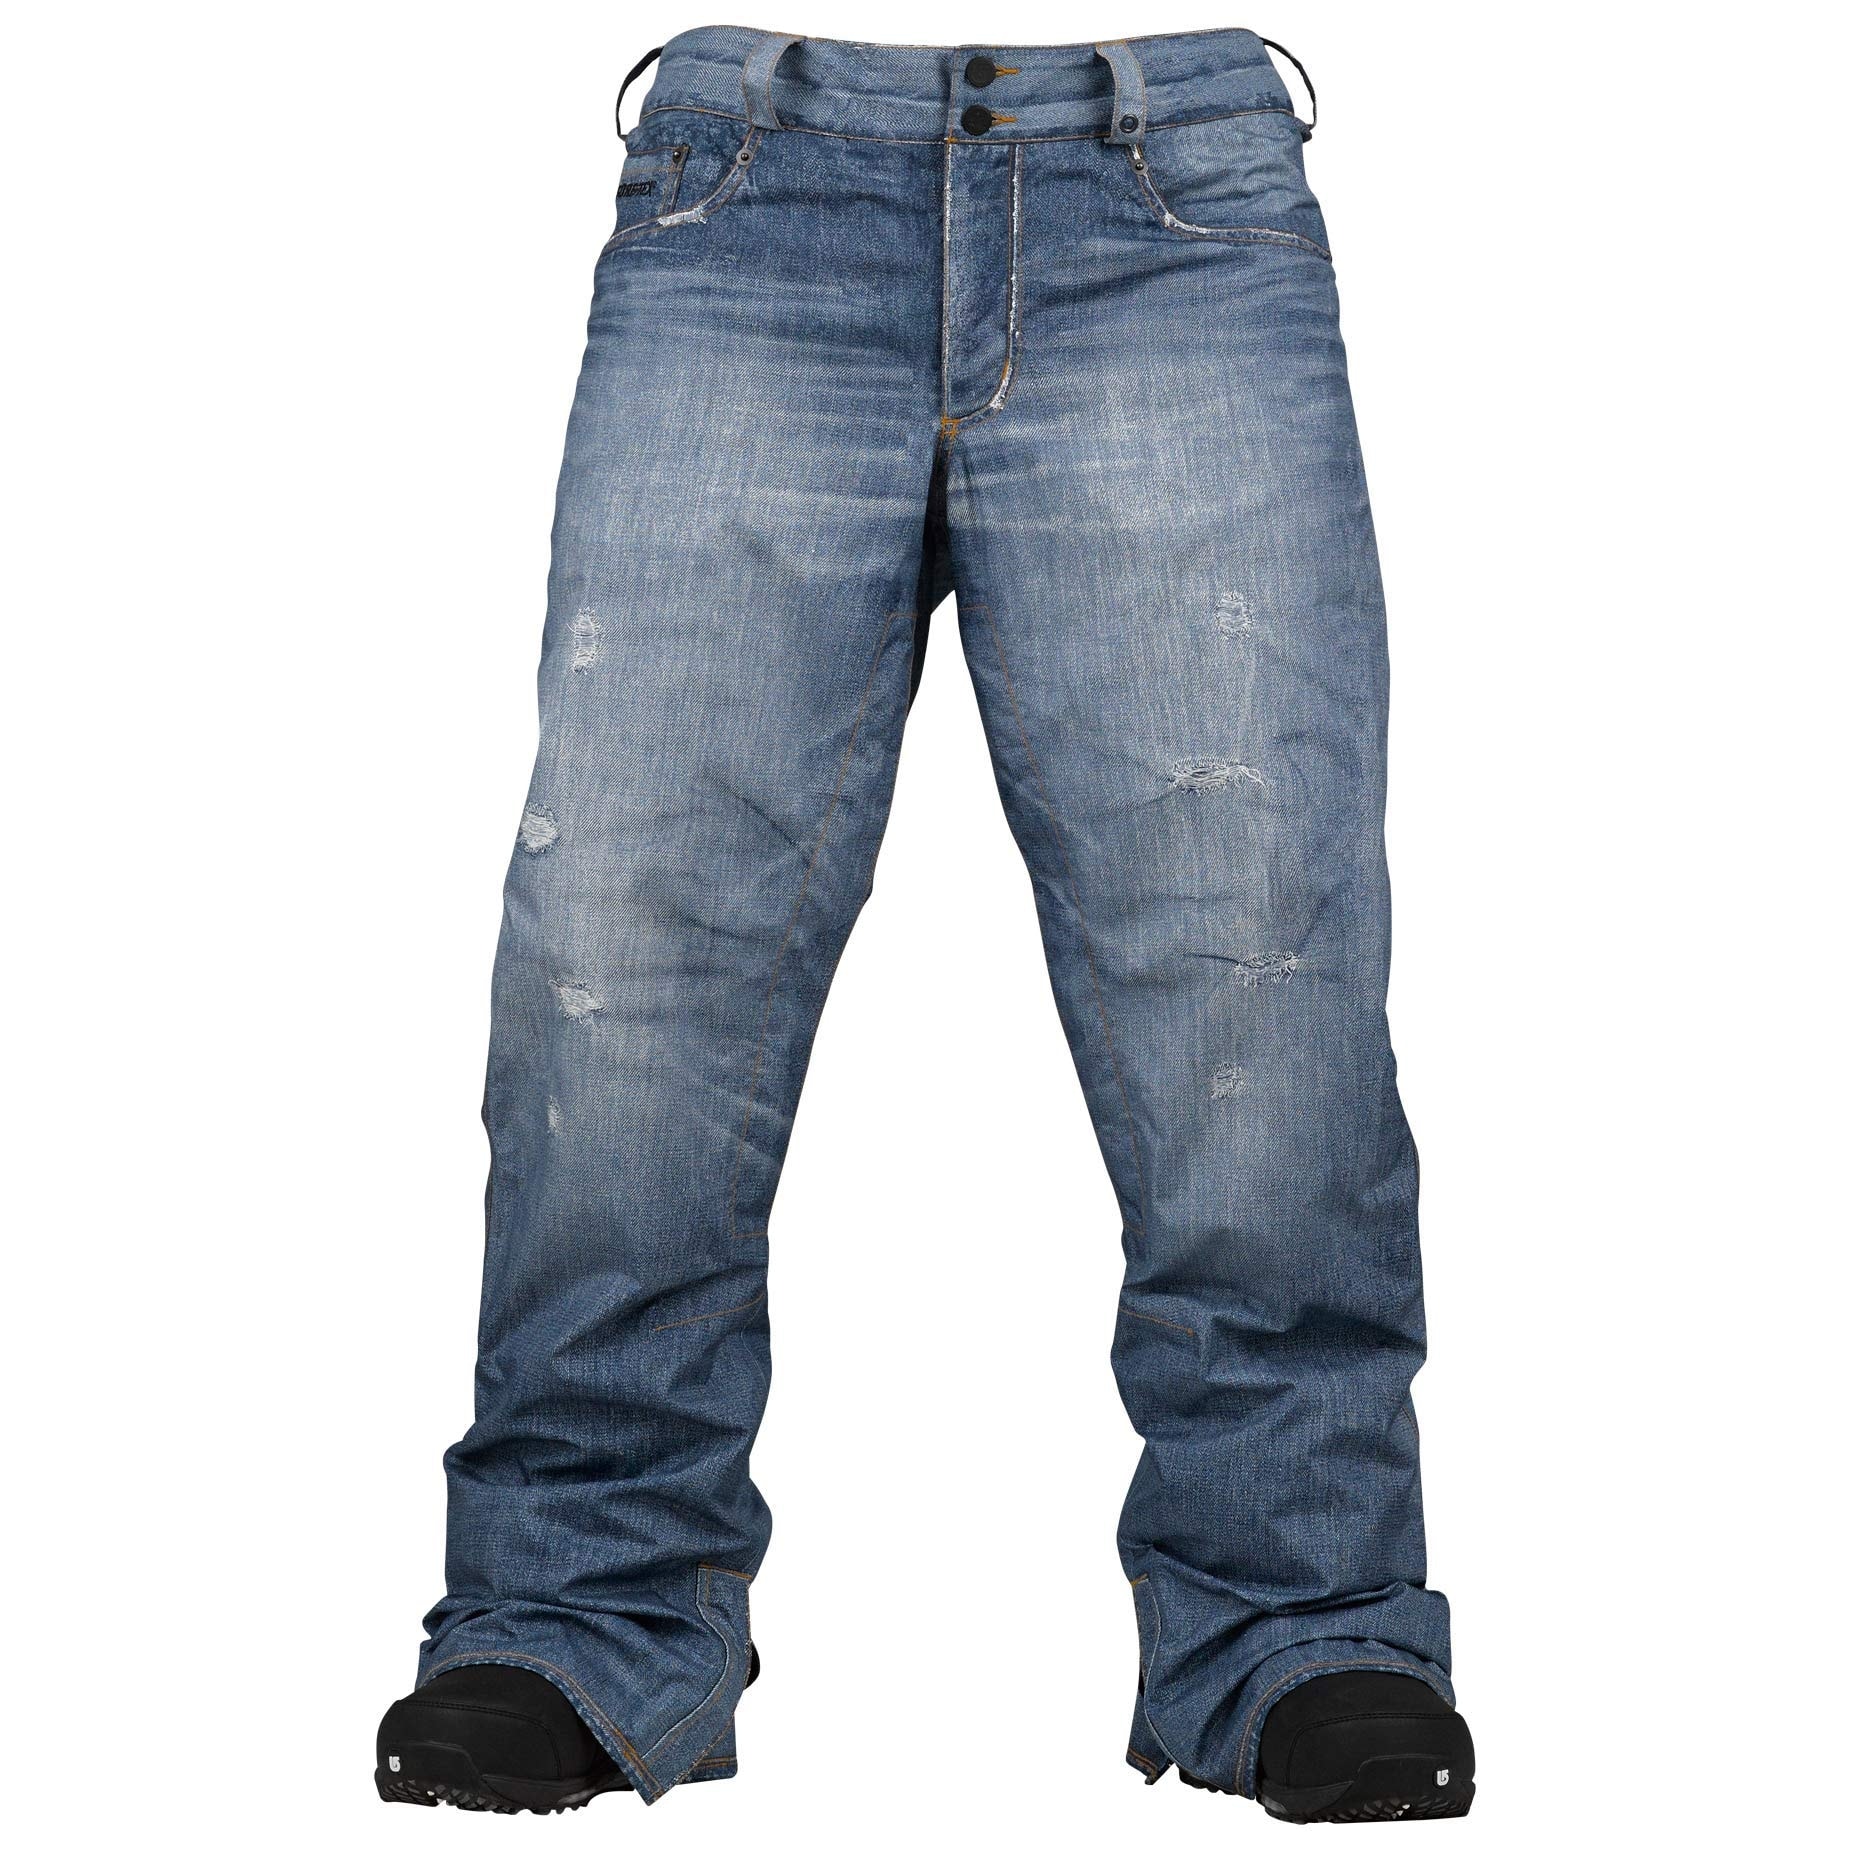 Snowboard Pants The Jeans blue denim print | Snowboard Zezula